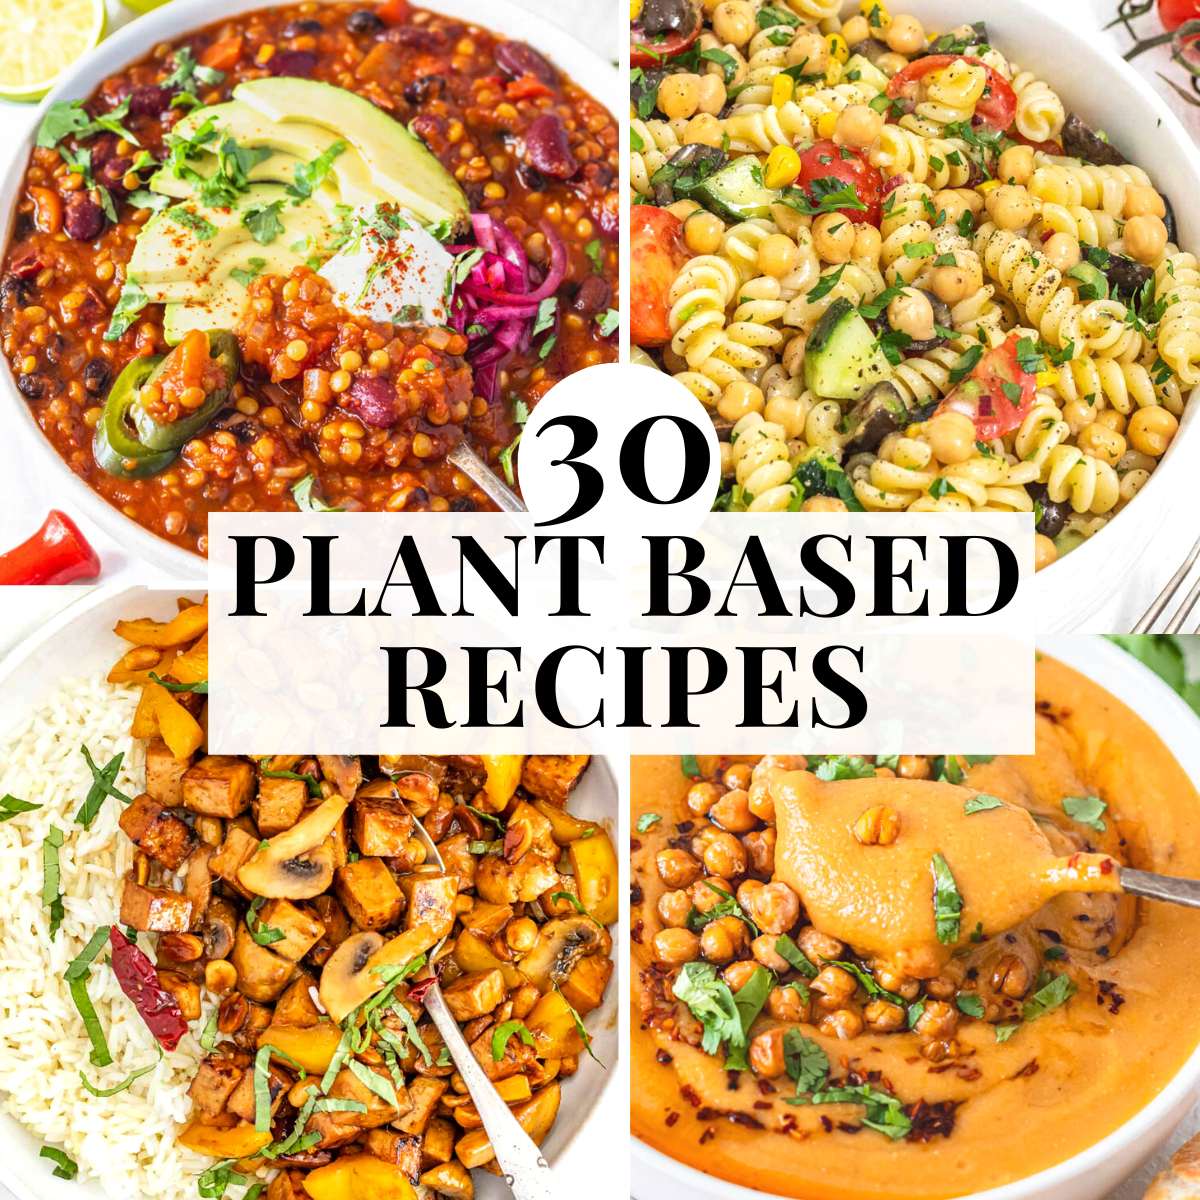 plant based meals